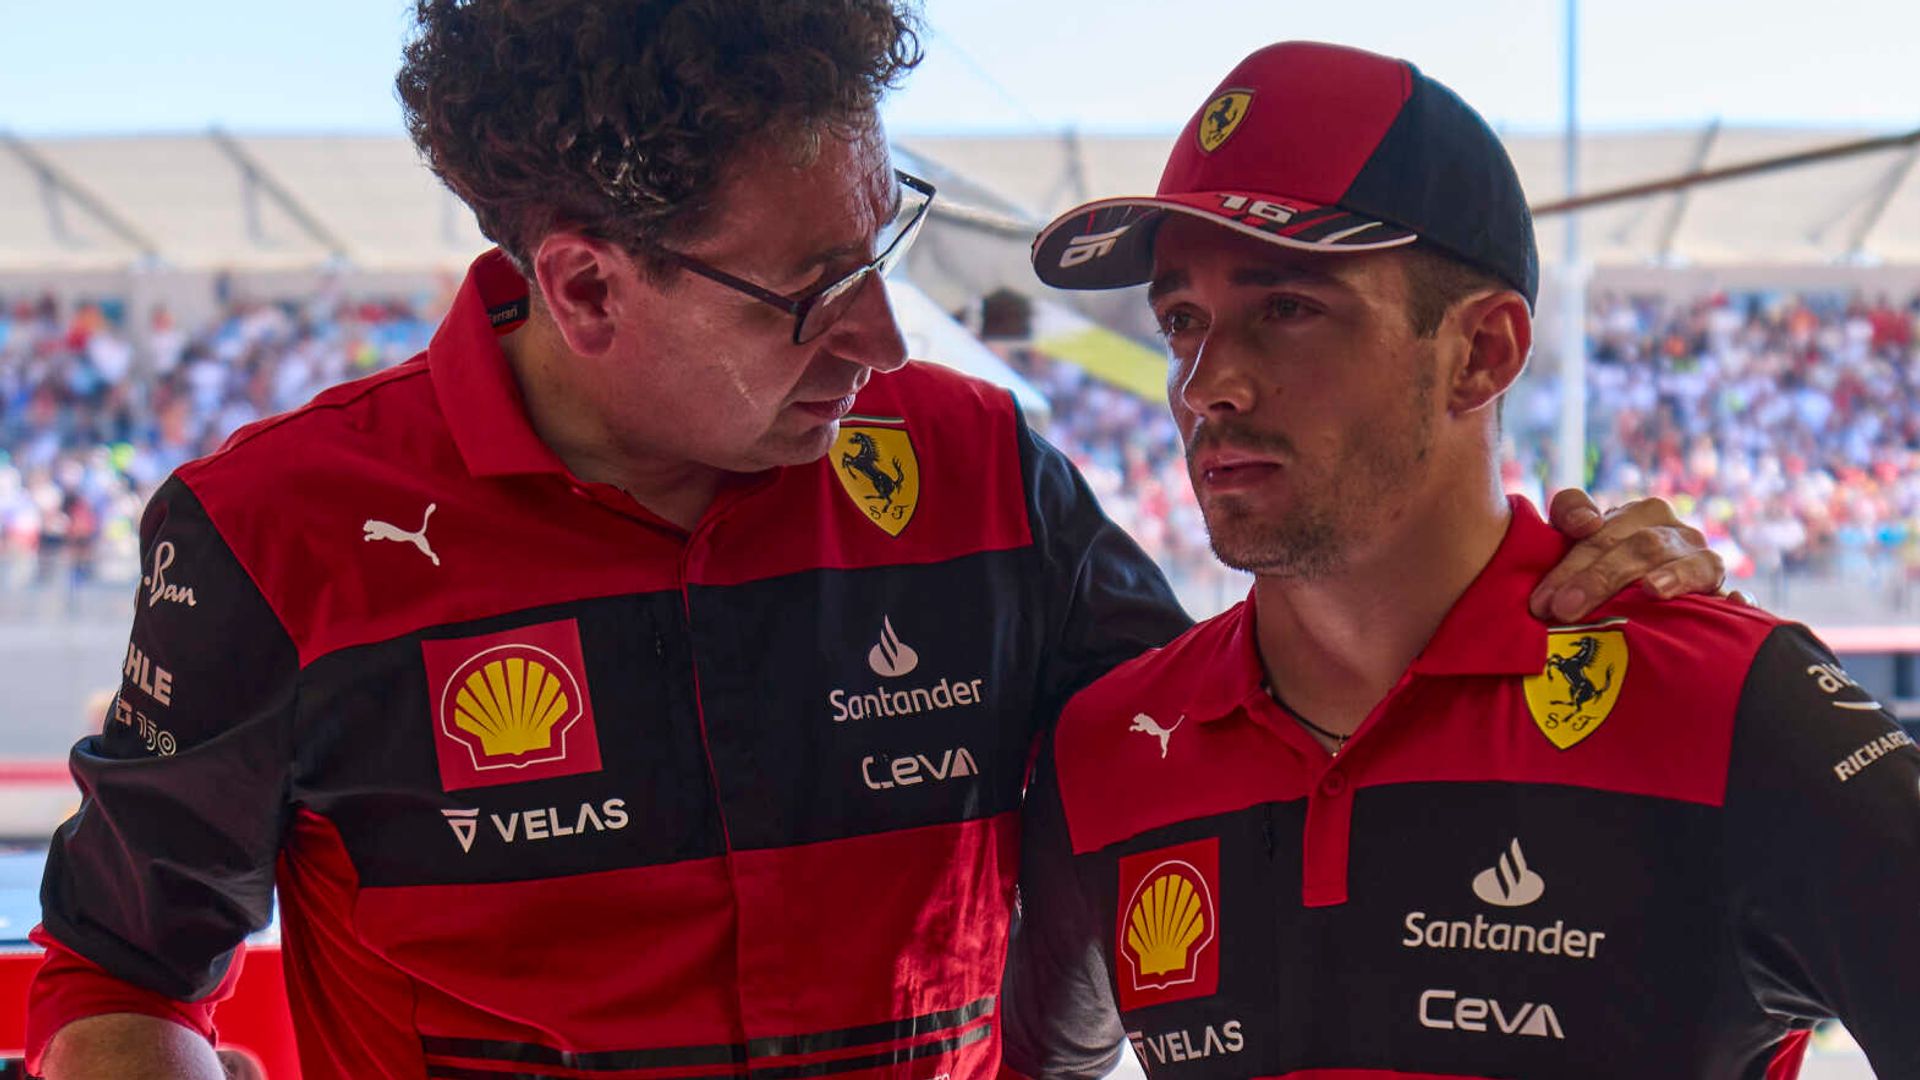 Ferrari: No changes needed despite F1 errors | What now for Leclerc?